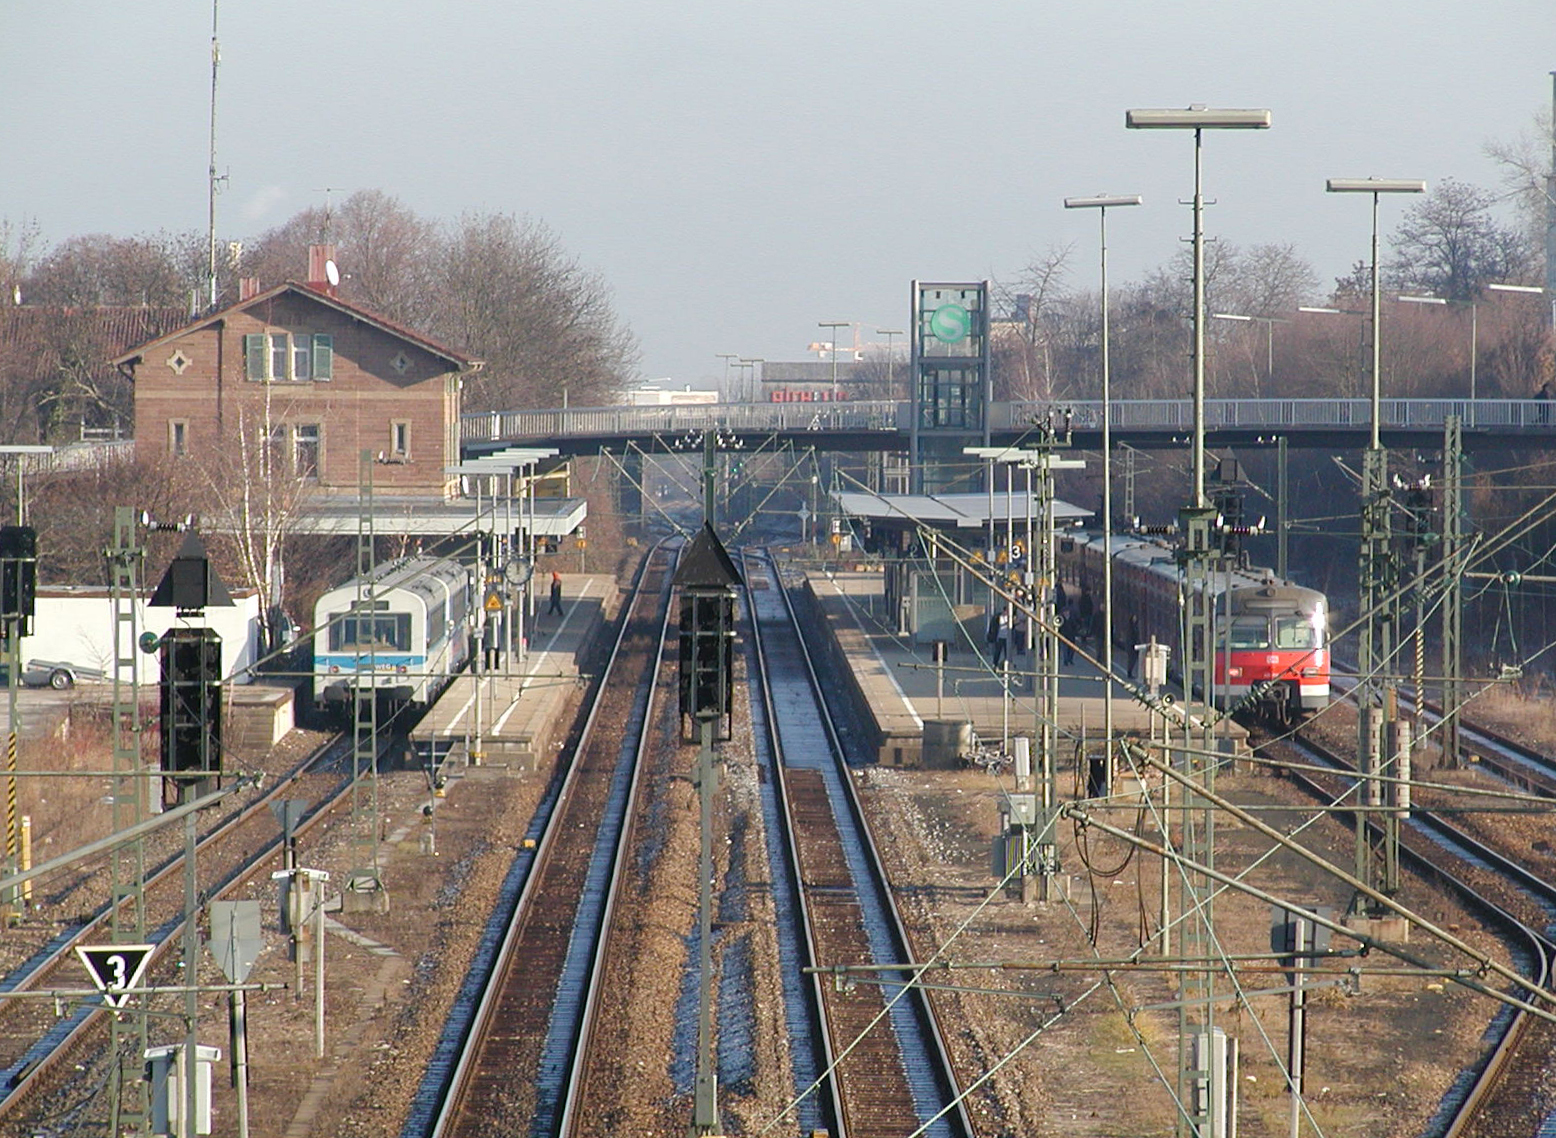 Korntal station - Wikipedia